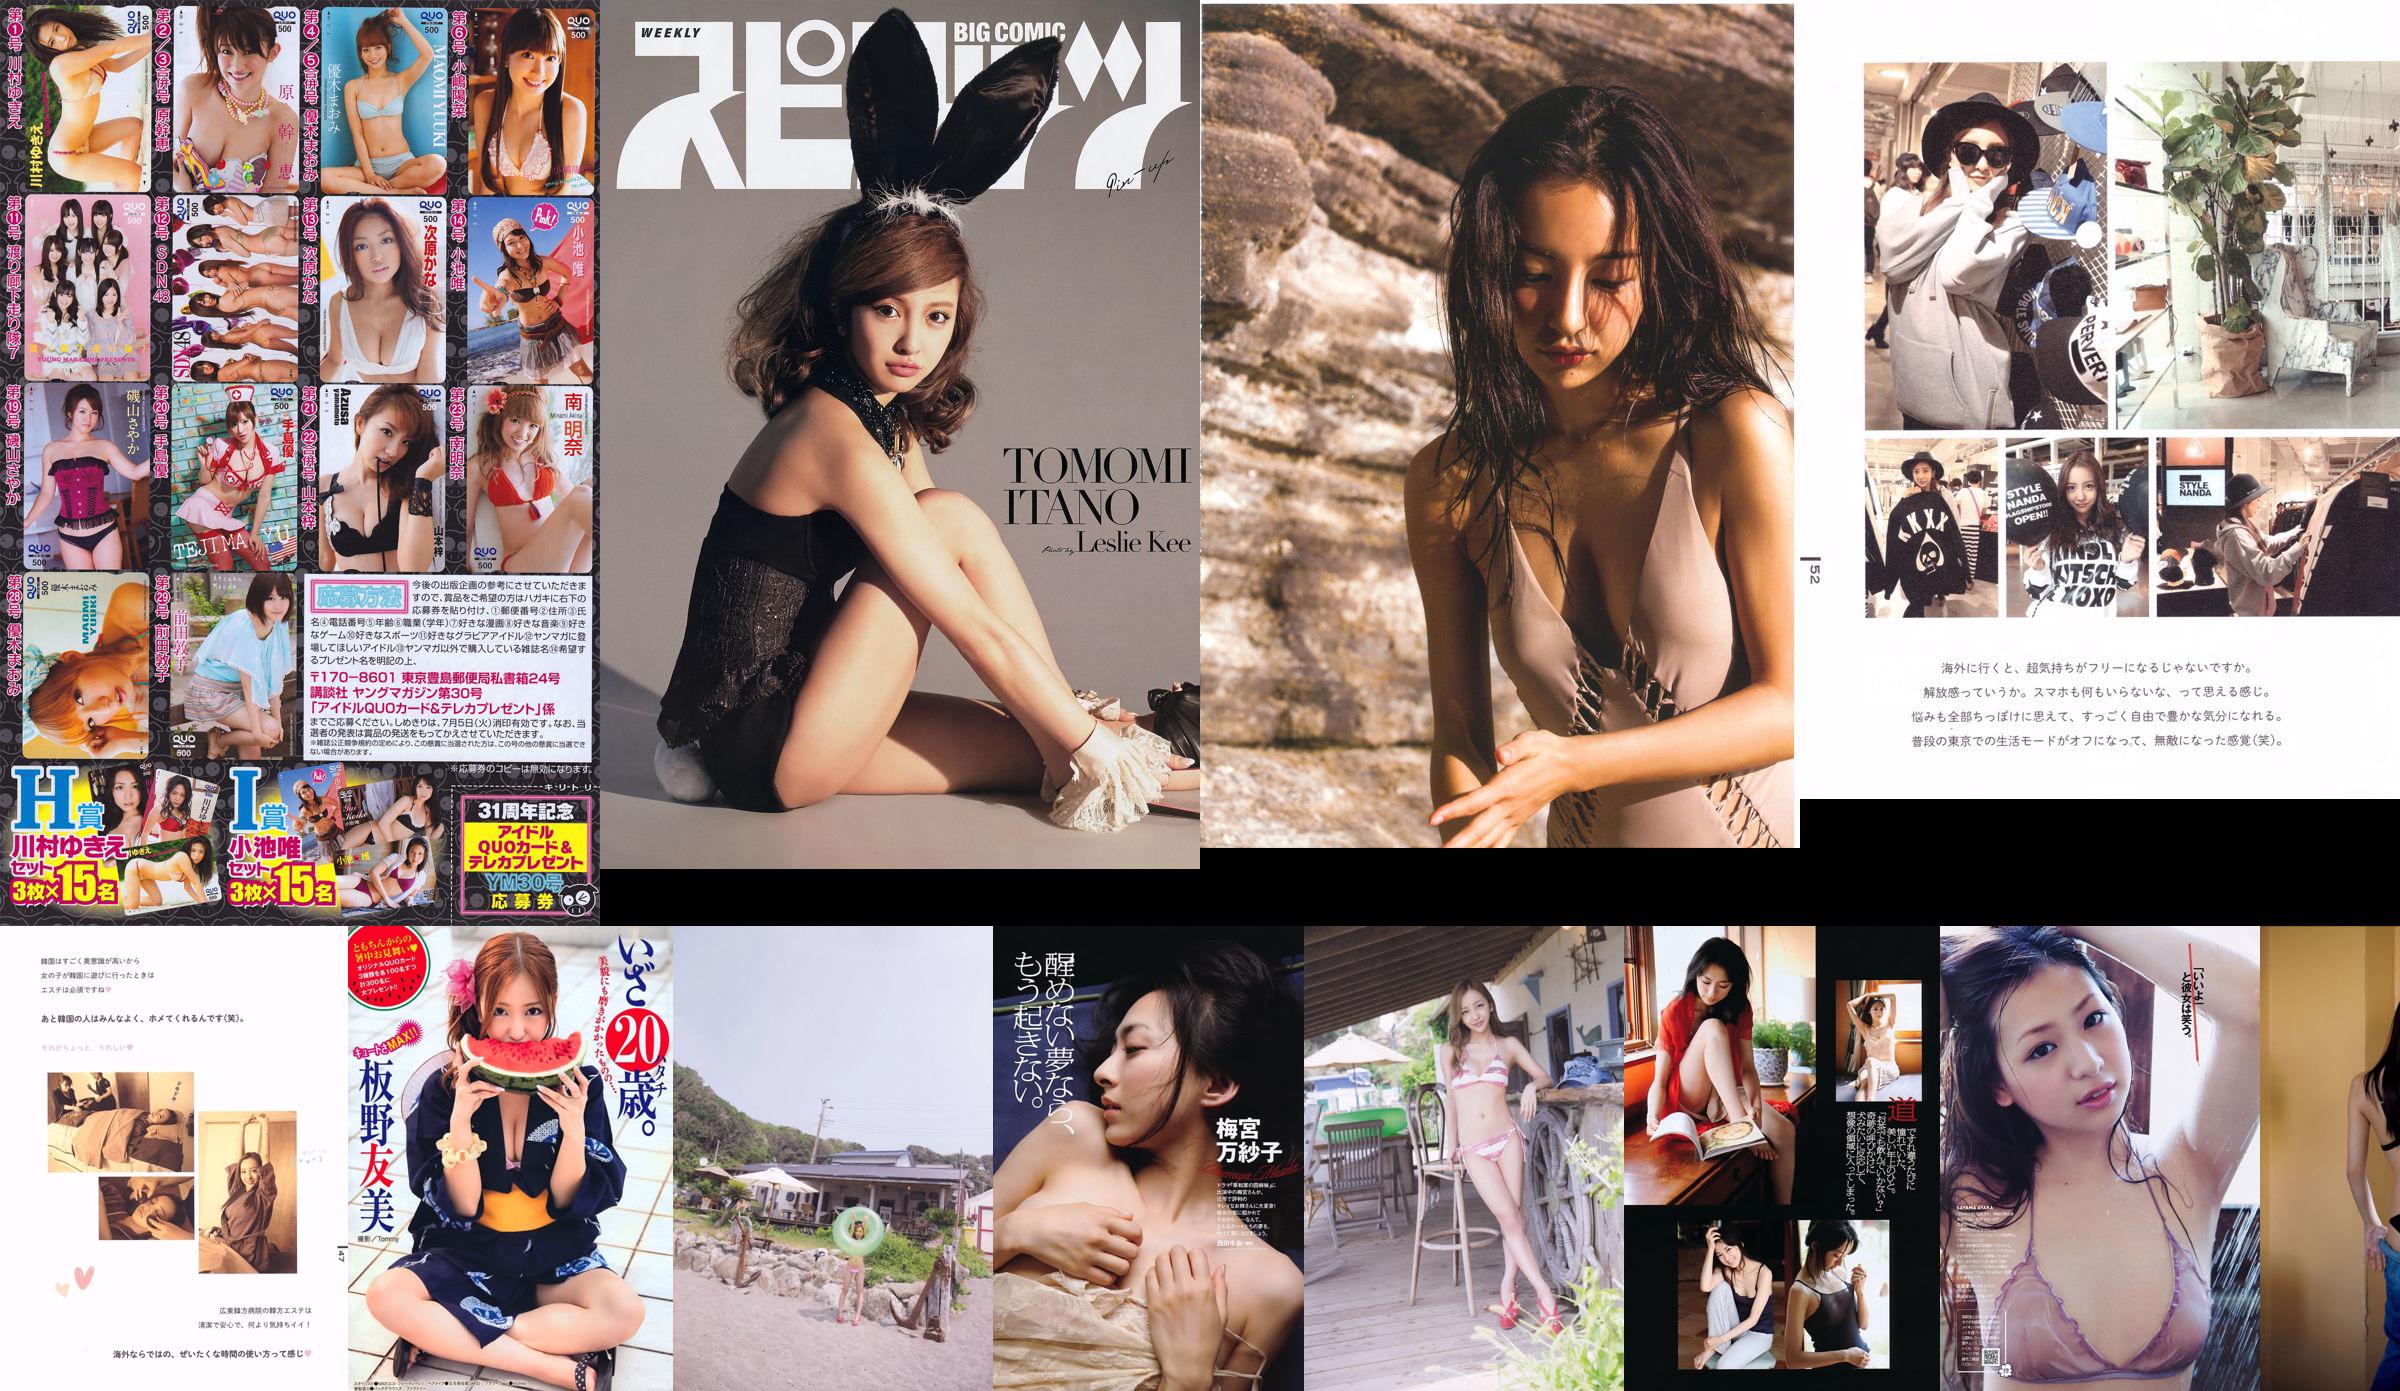 [Magazyn Młodych] Tomomi Itano 2011 No.36-37 Photo Magazine No.966cd6 Strona 1